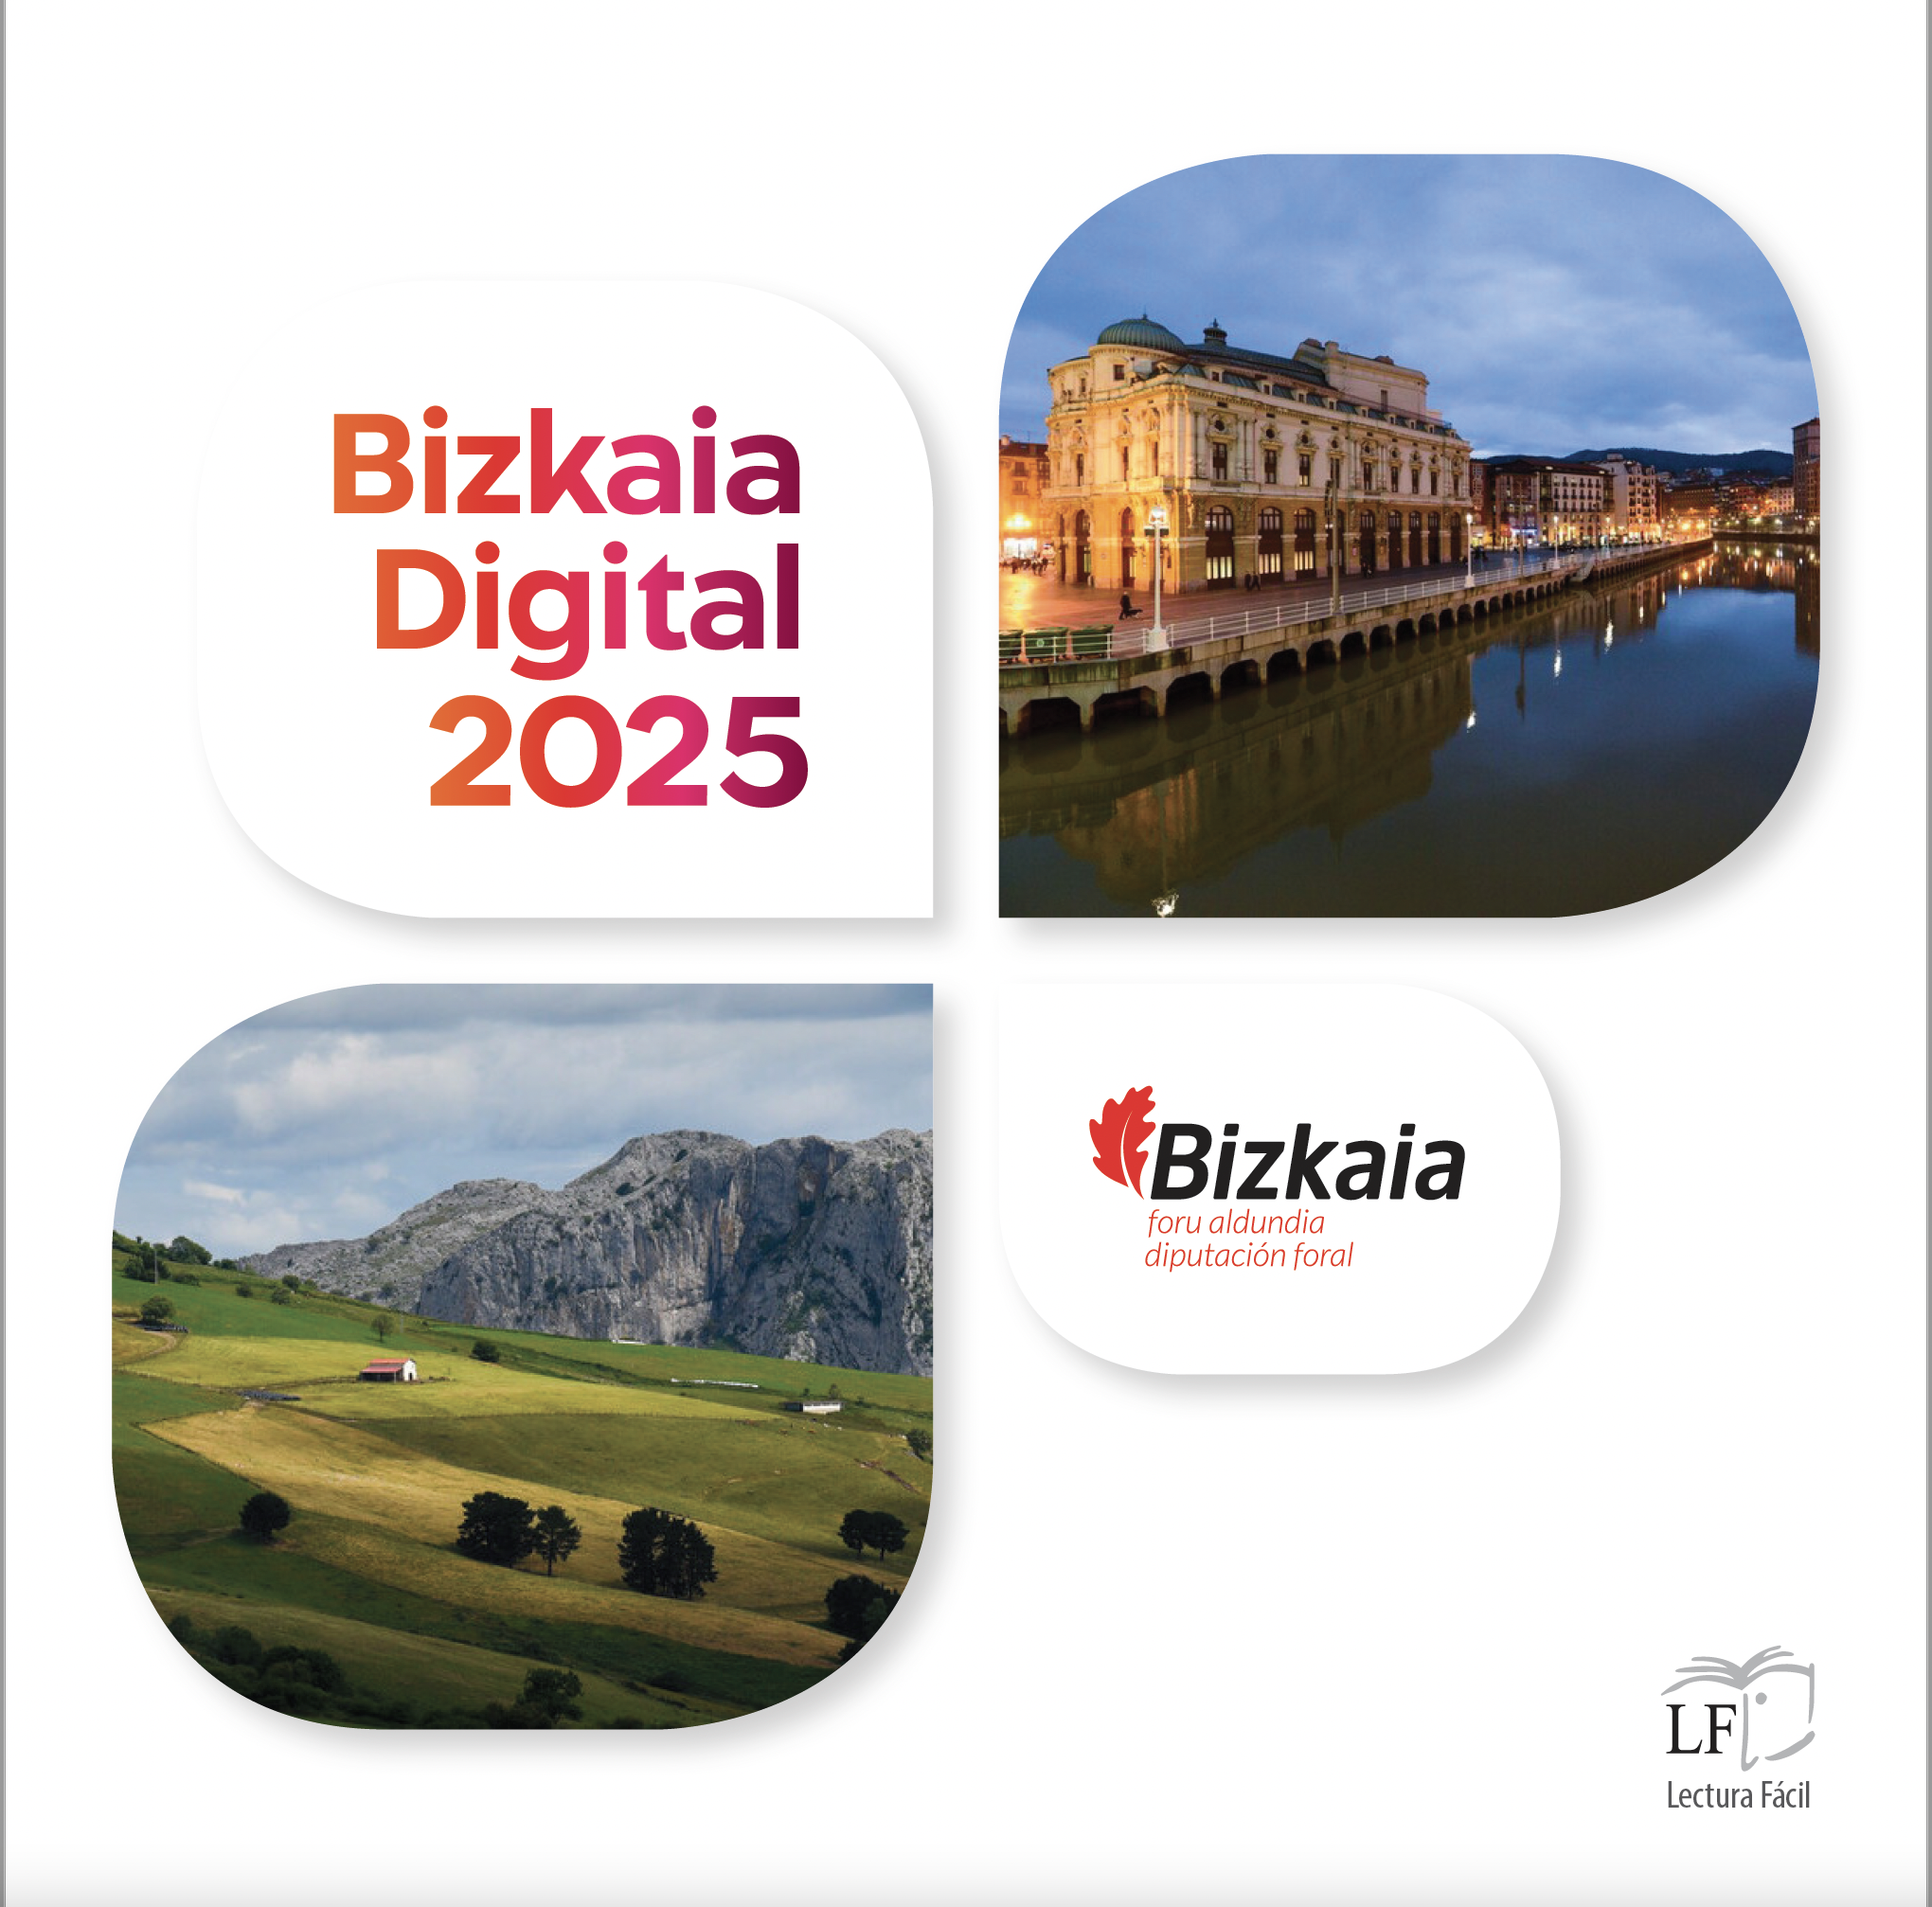 Proyecto lenguaje fácil 2021-2022 Bizkaiko foru aldundia